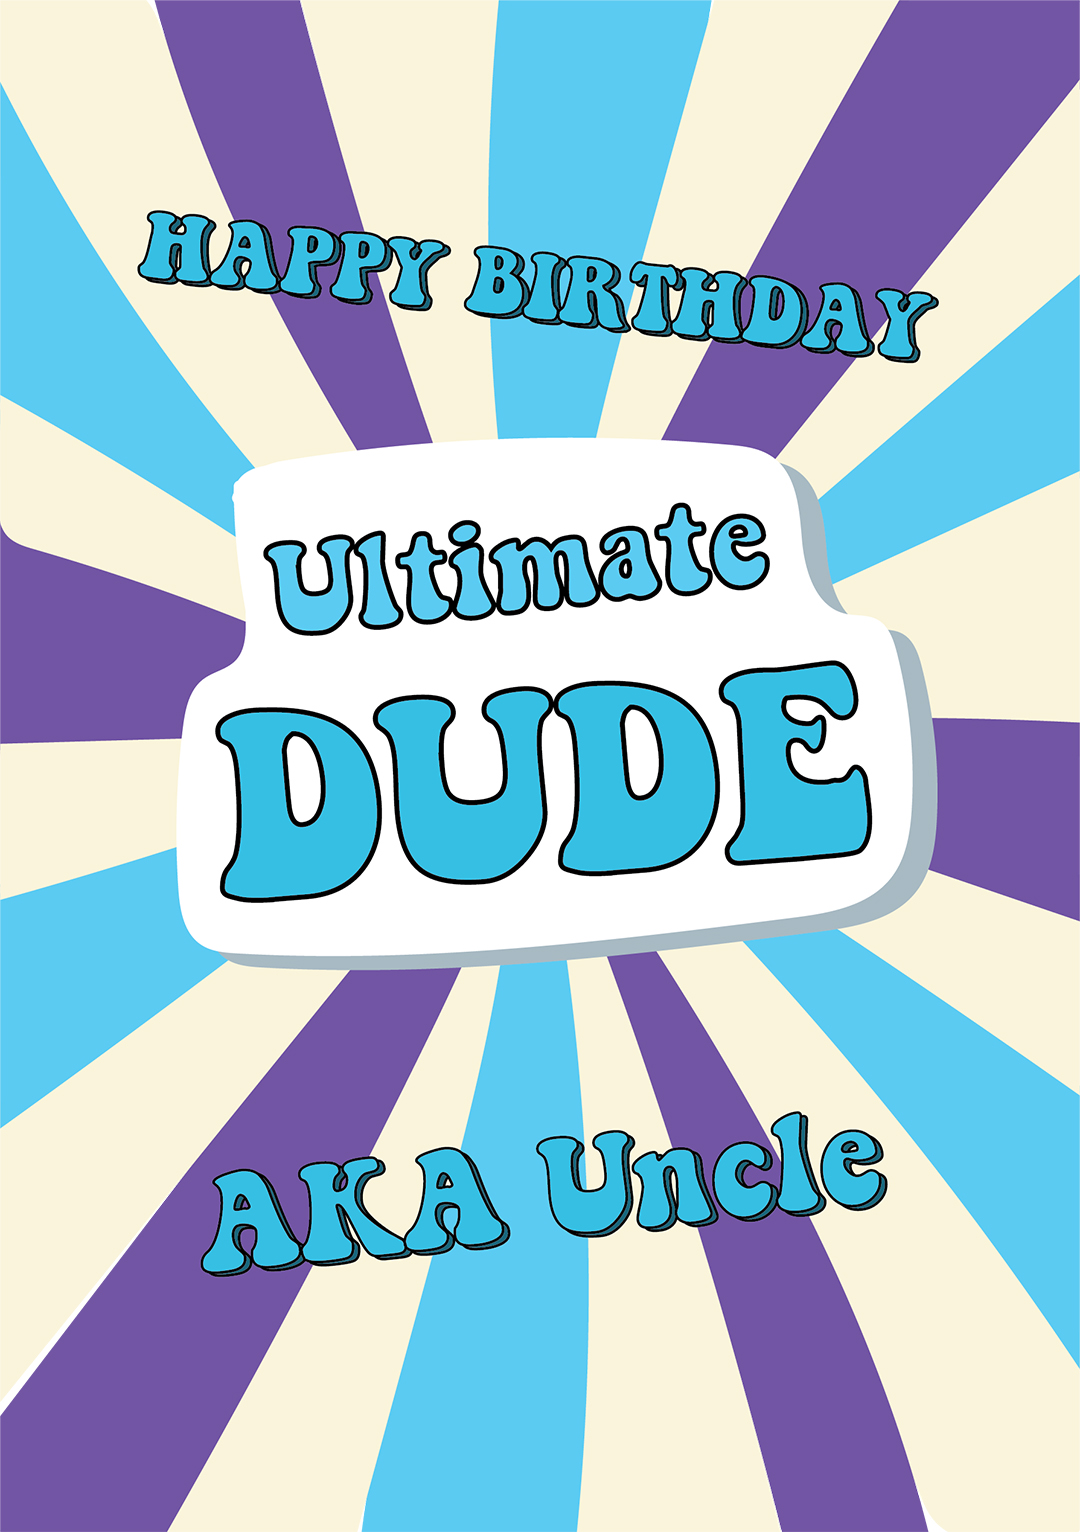 Happy Birthday - Ultimate Dude - AKA Uncle